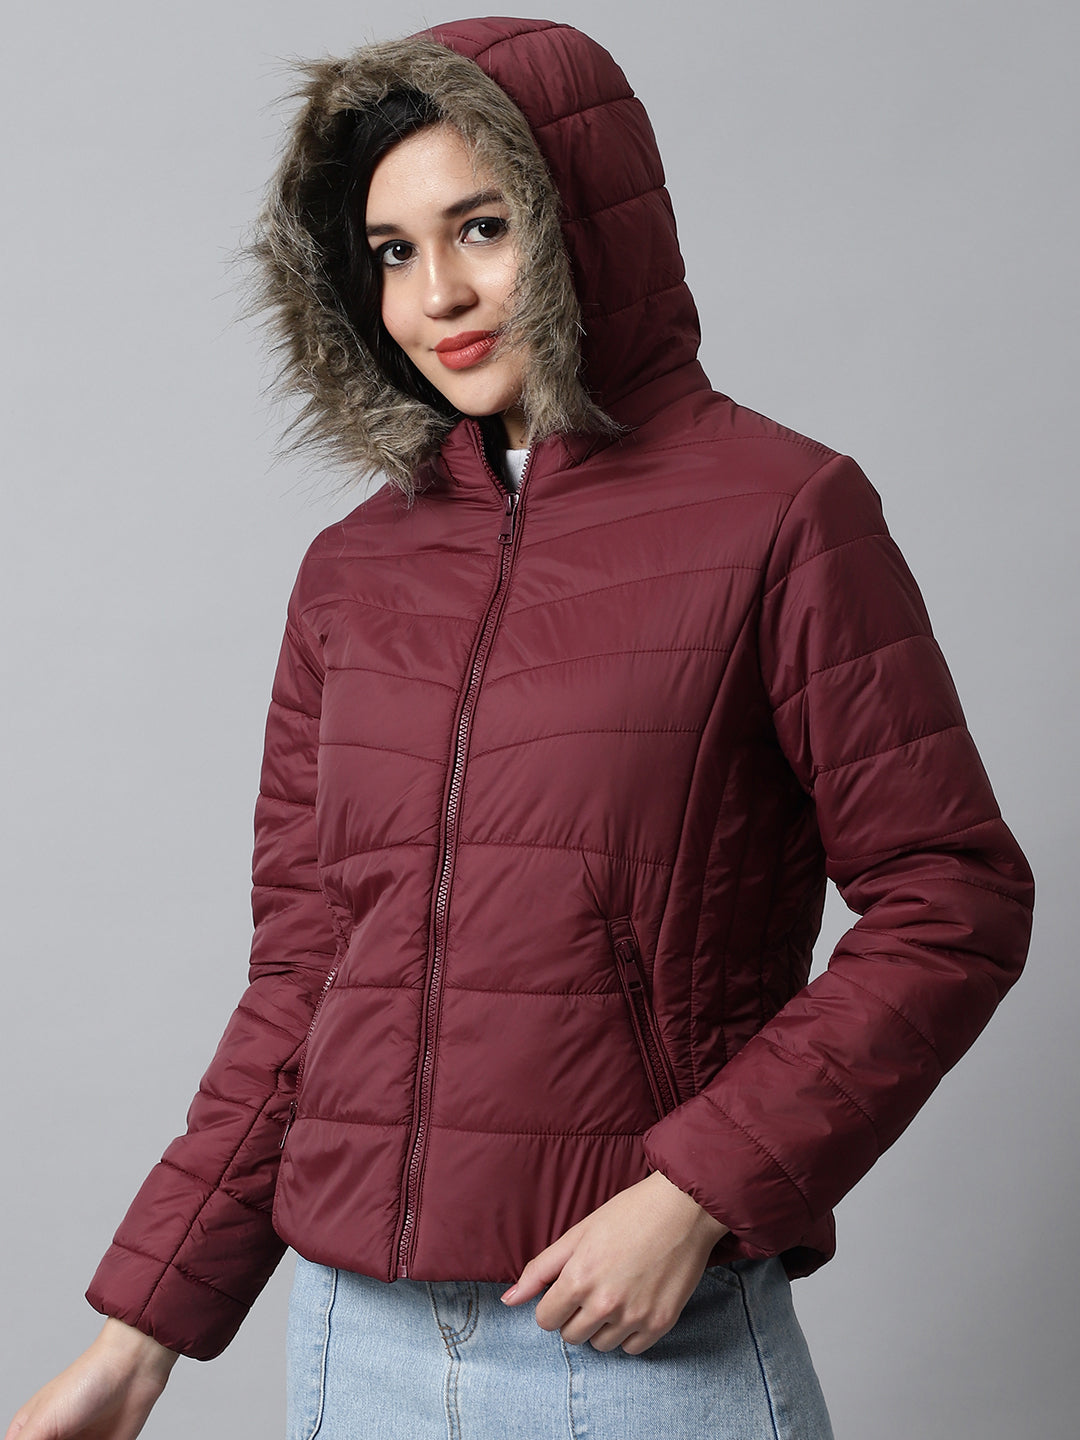 Shop Girls hooded Jacket star printed jacket peach at Woollen Wear